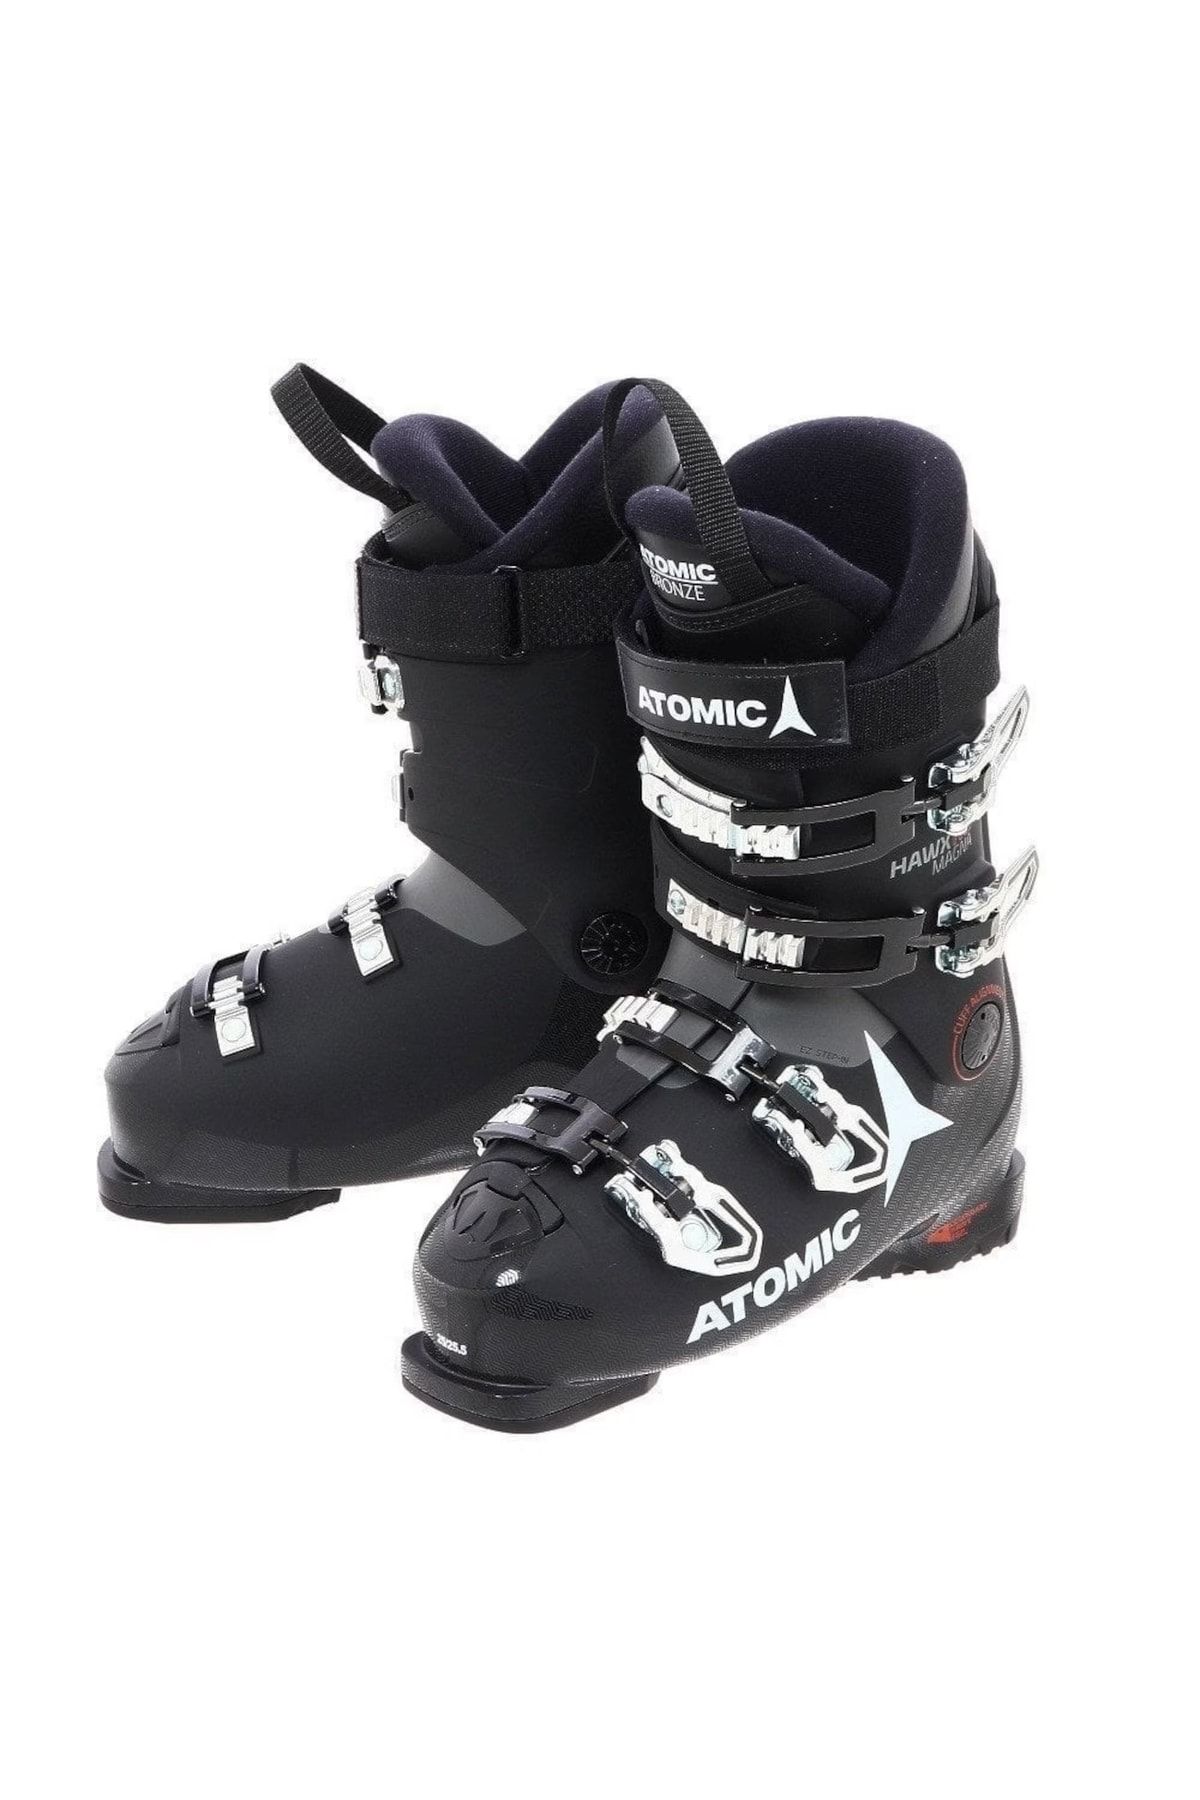 Atomic Hawx Magna R90 Black / Anthracite Kayak Ayakkabısı